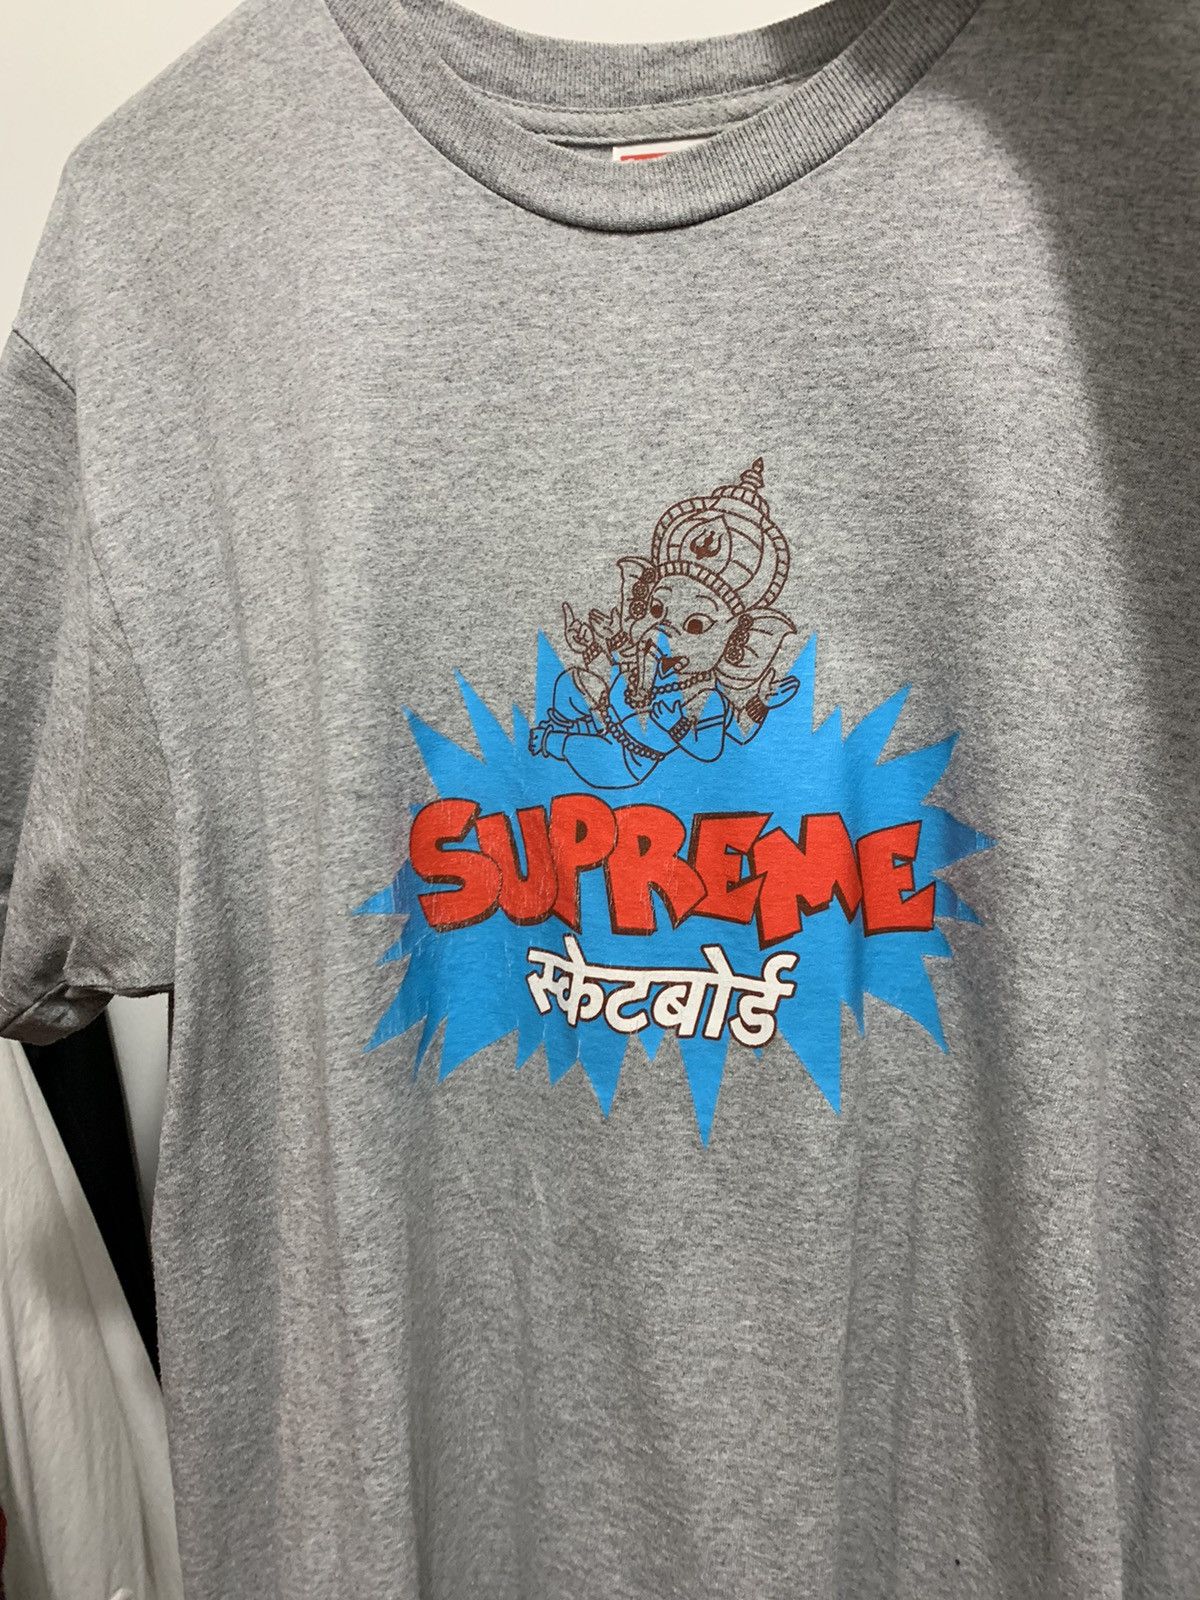 Supreme Supreme “Ganesha” T-shirt | Grailed